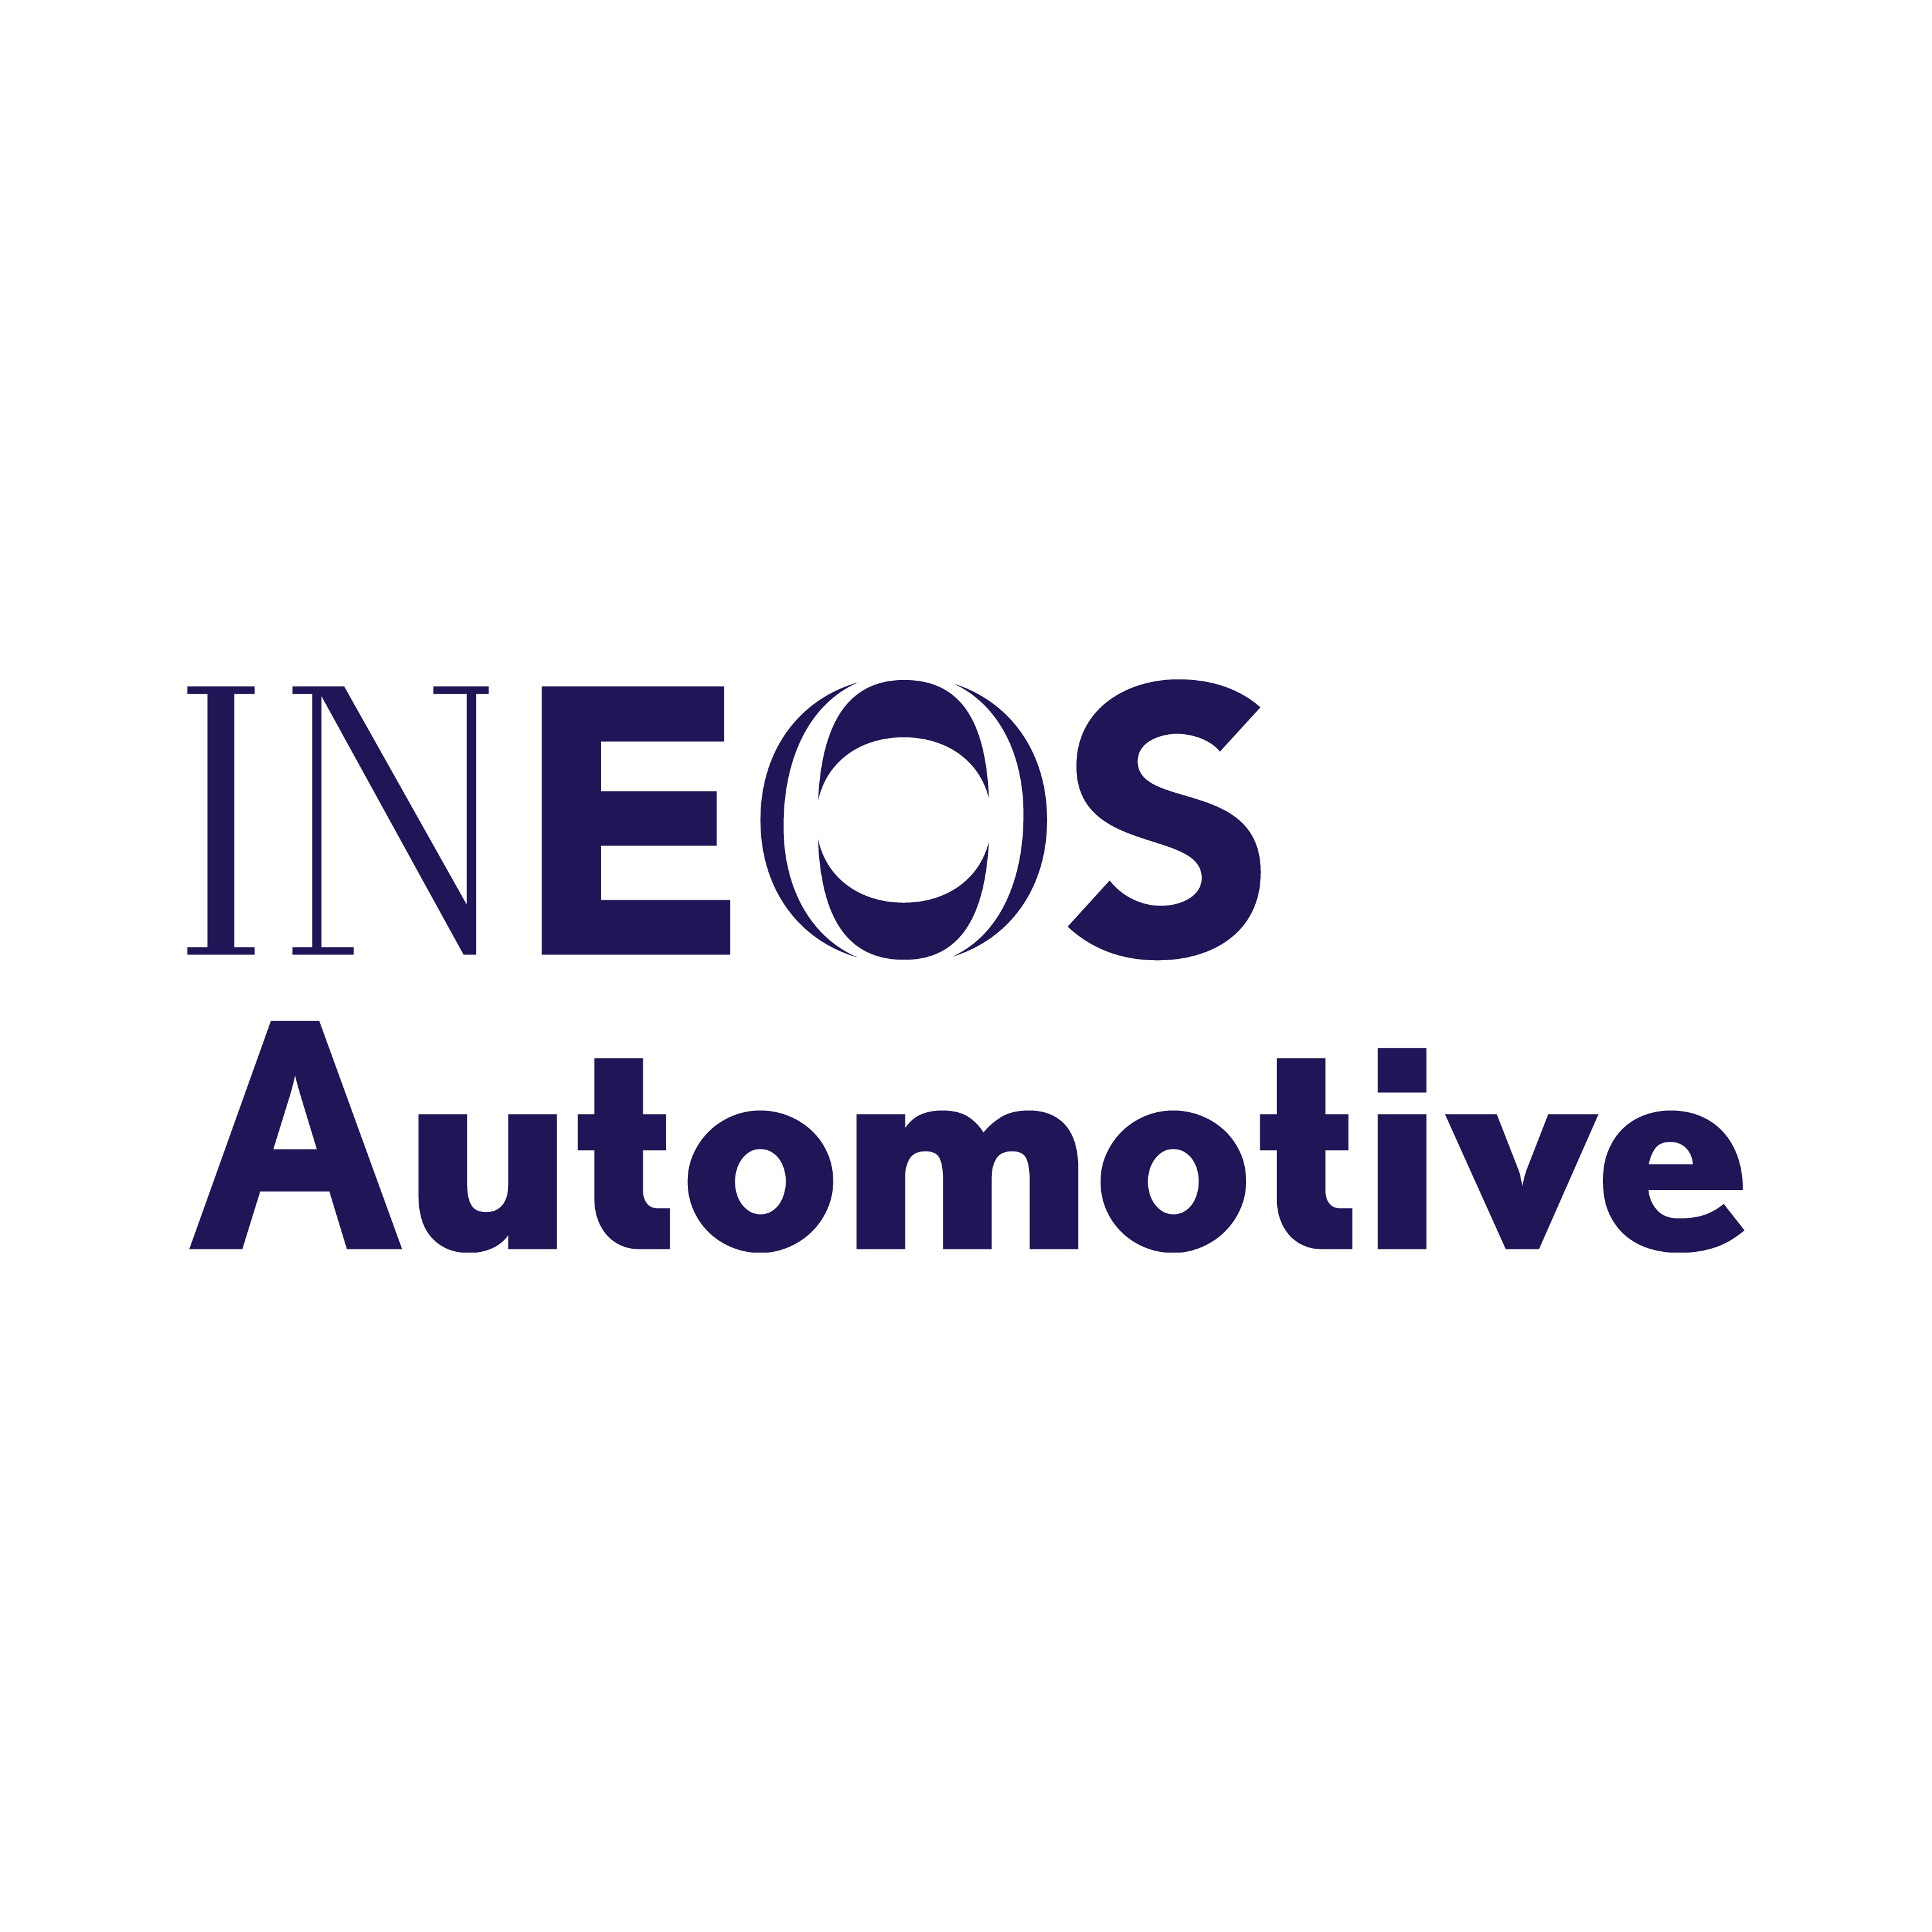  INEOS Automotive  brand note 